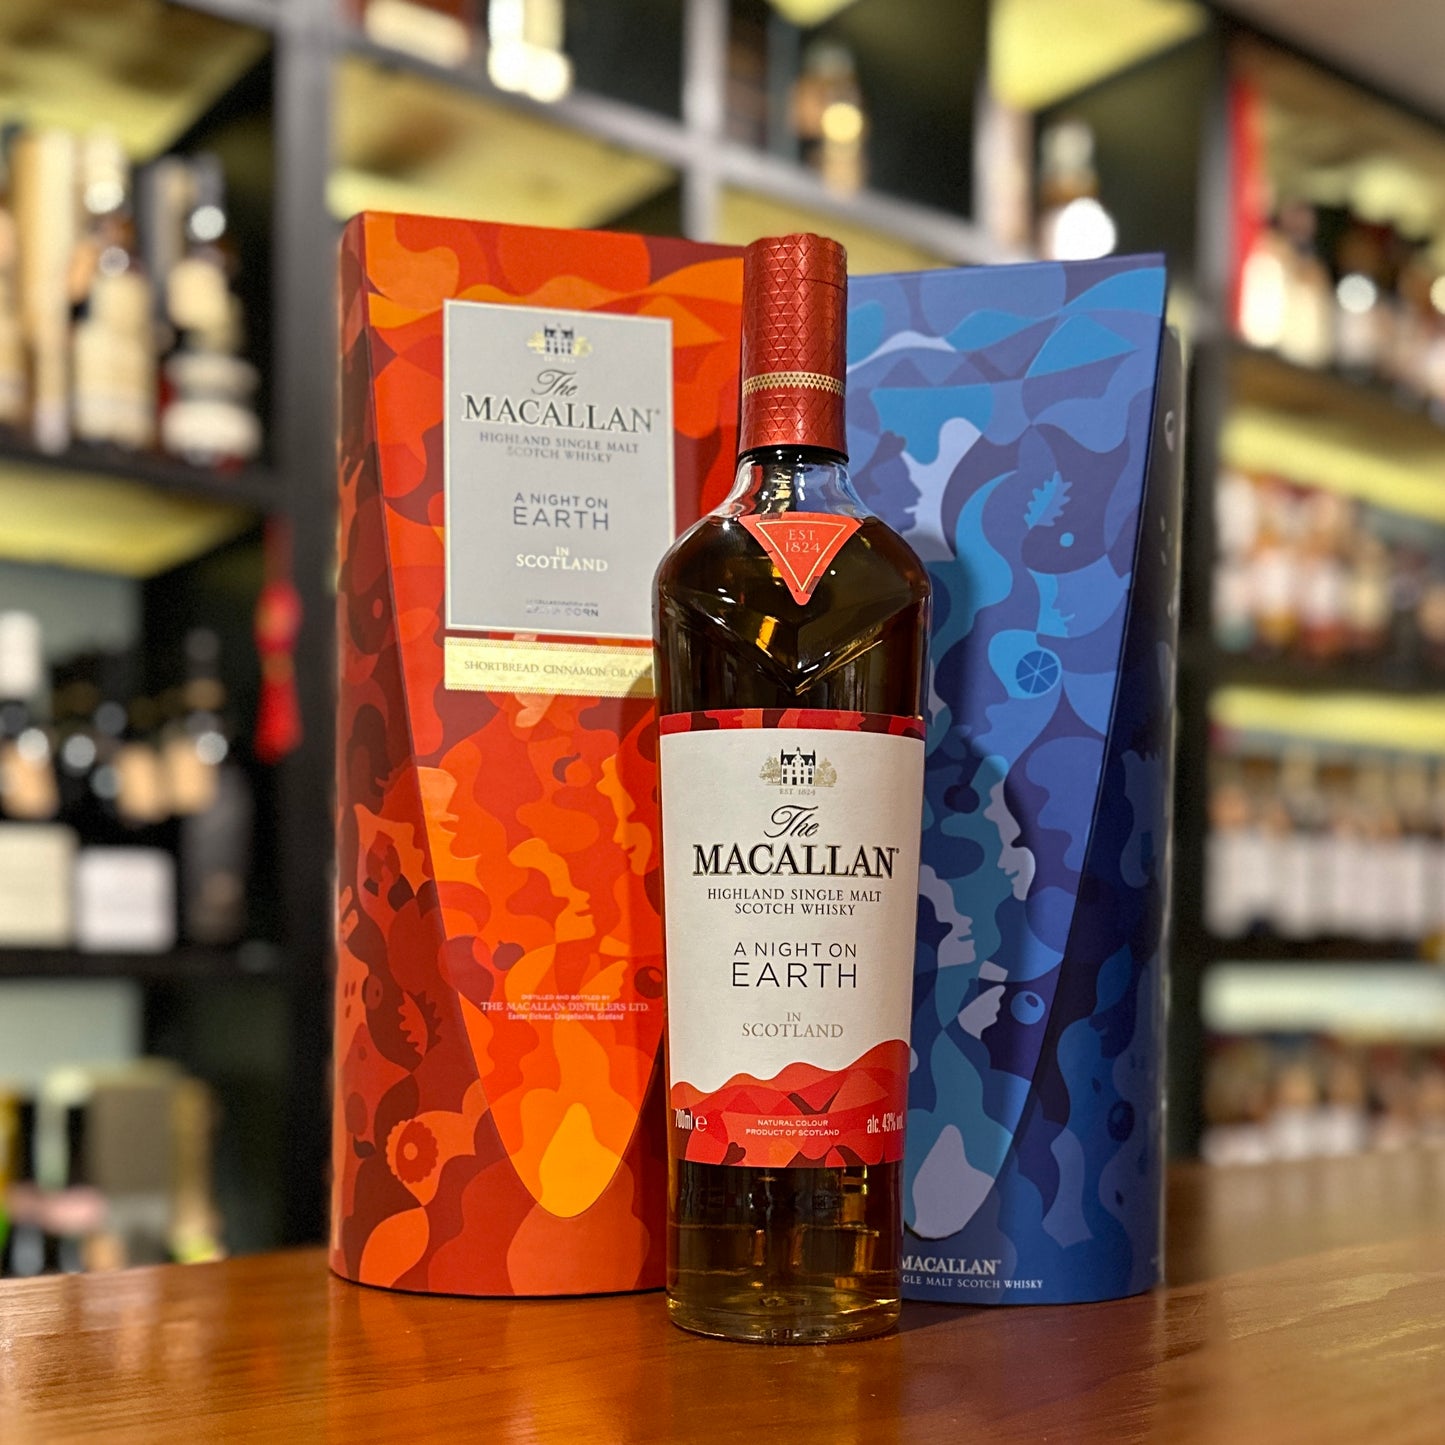 Macallan A Night on Earth in Scotland Single Malt Scotch Whisky (2022 Release)